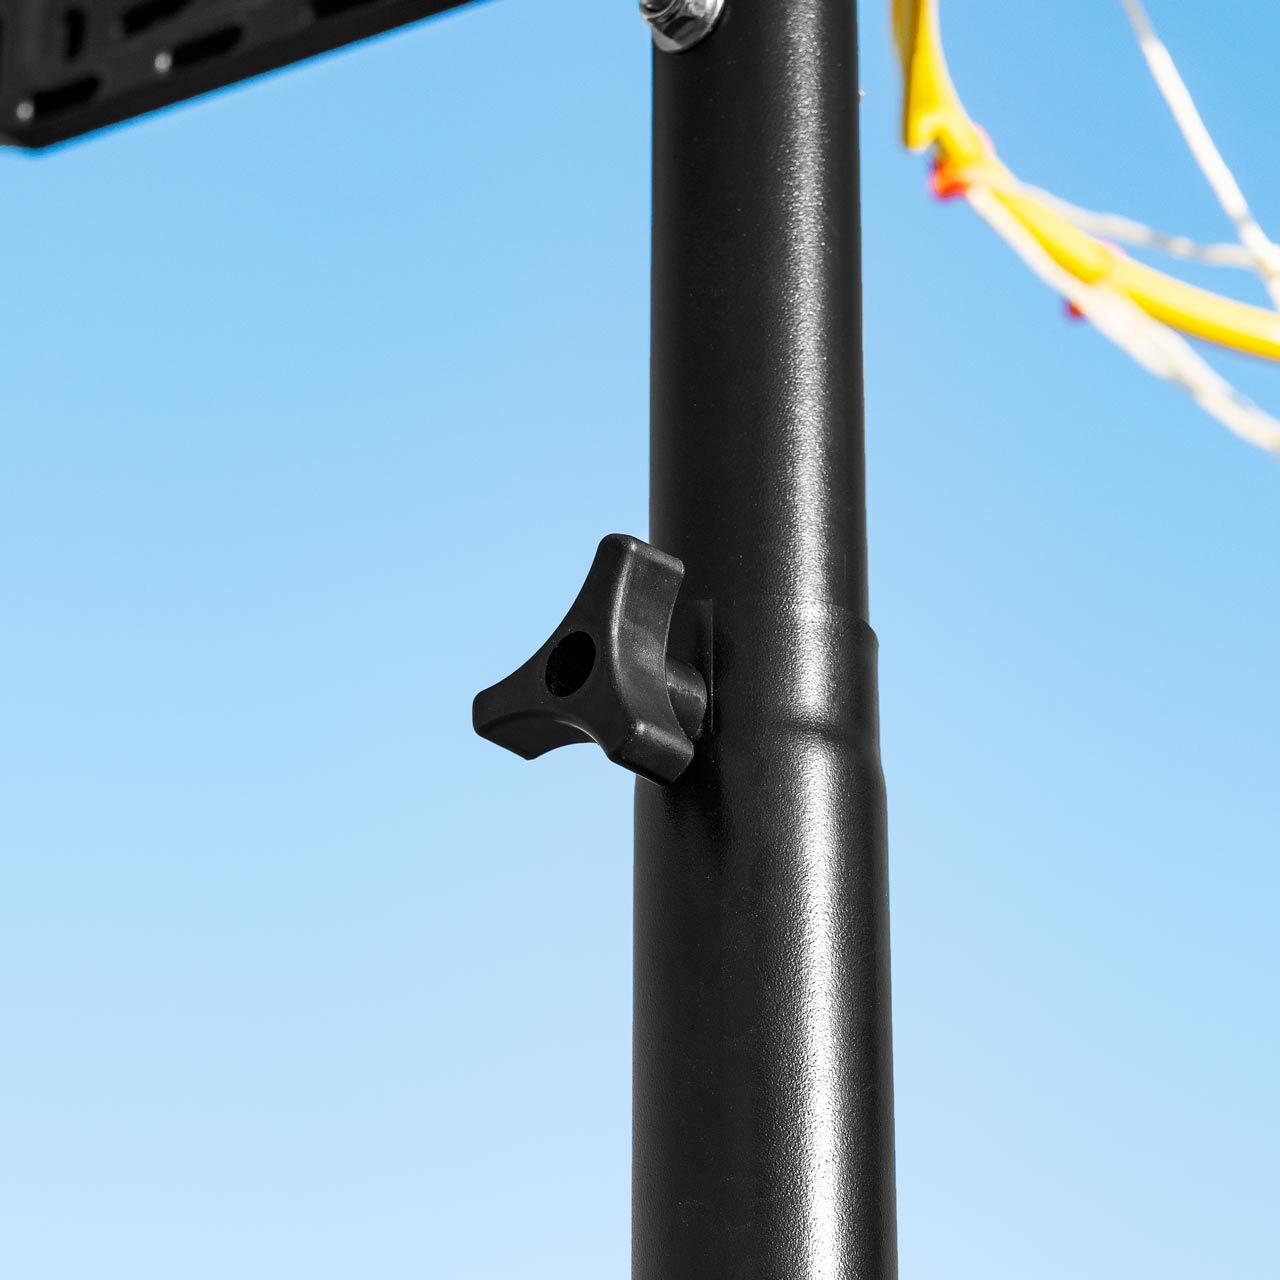 FORZA Adjustable Basketball Hoop And Stand System [Basketball Post Style:: JS220] [Post Padding:: No Padding] [Upgrade Options:: No Upgrade]